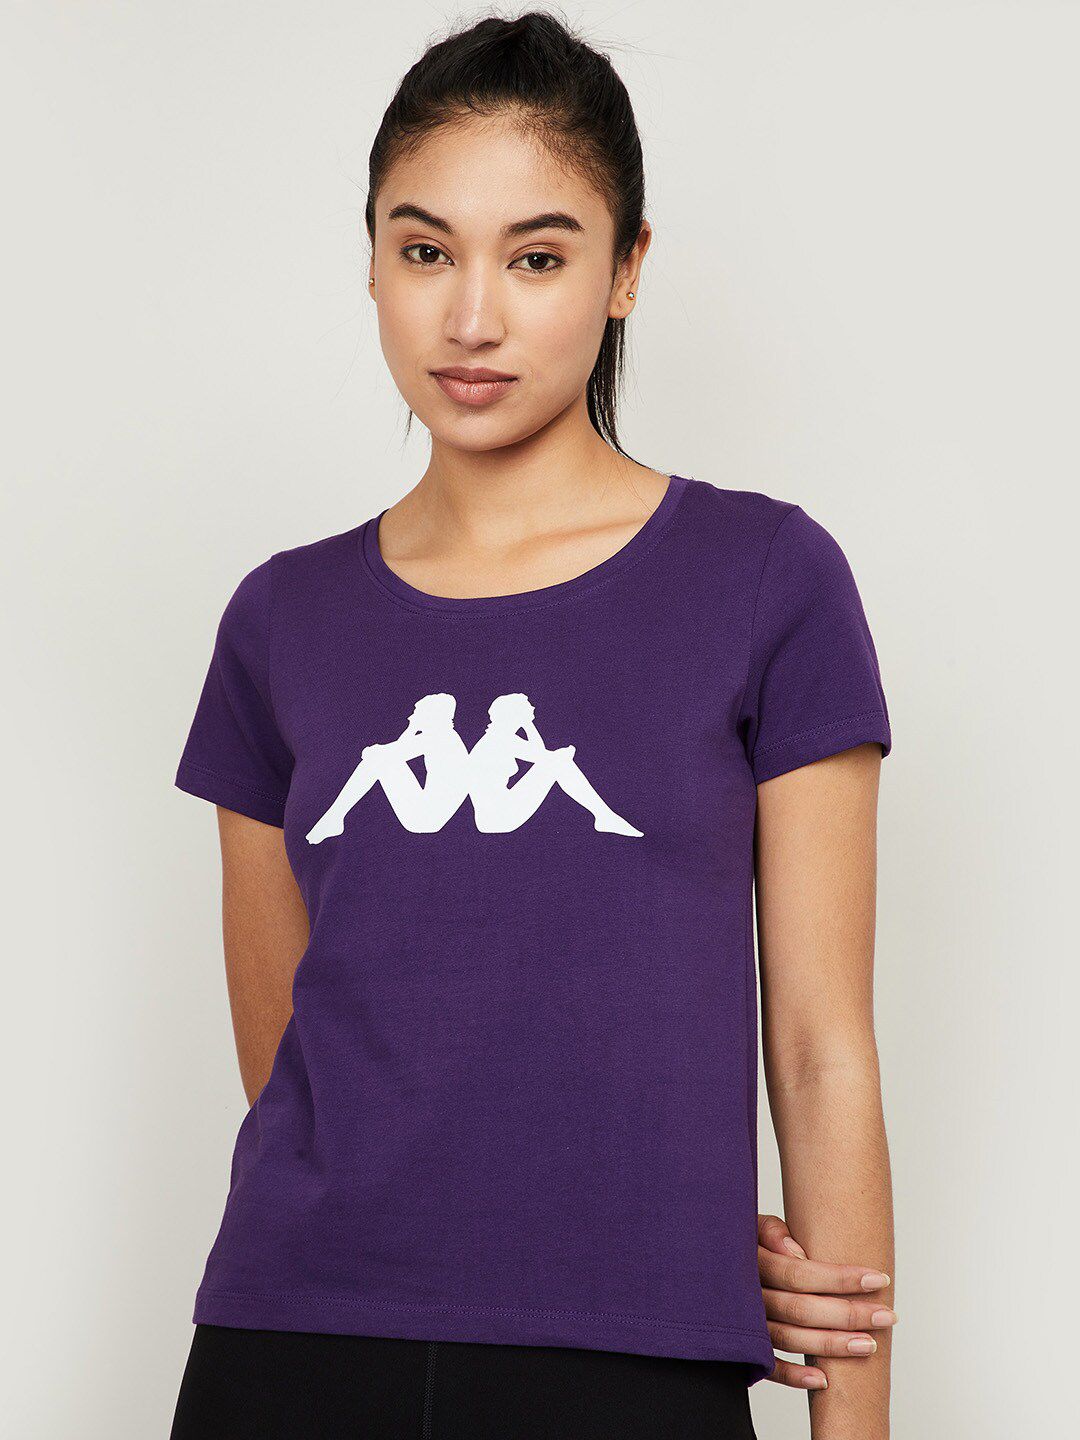 Kappa Women Purple Printed Training or Gym T-shirt Price in India